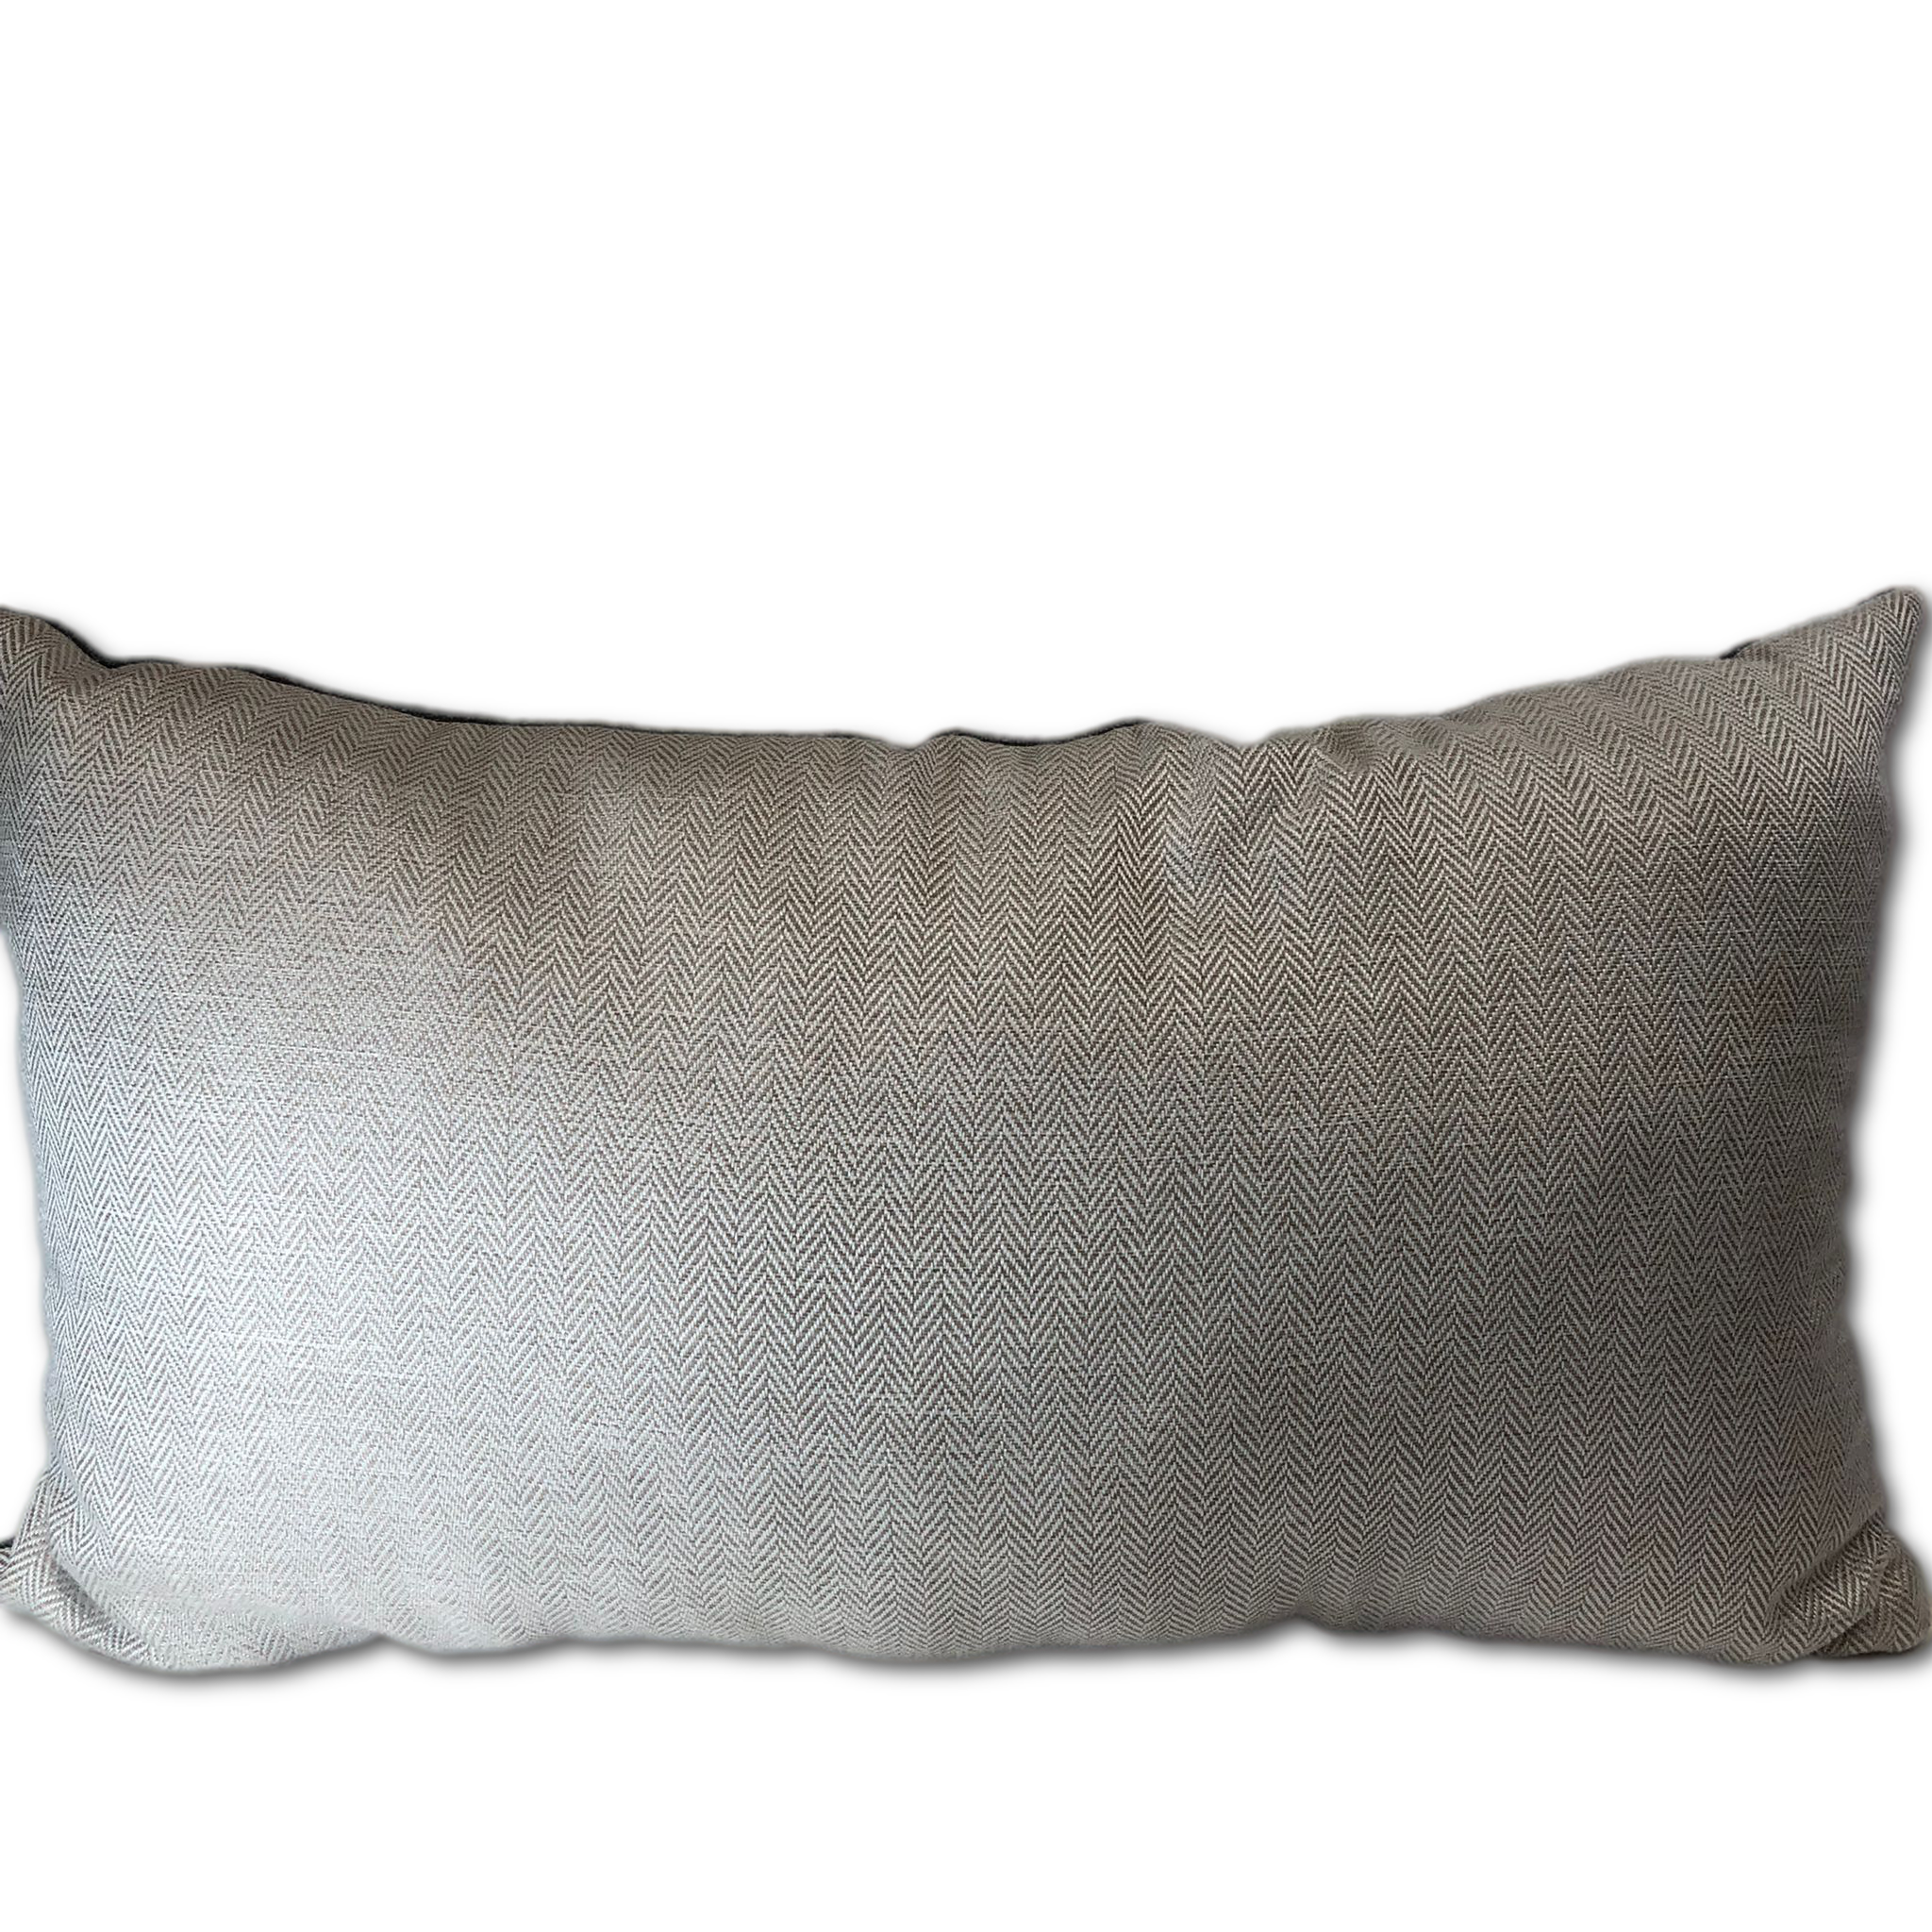 StudioChic Home Sentiments Decorative Pillow